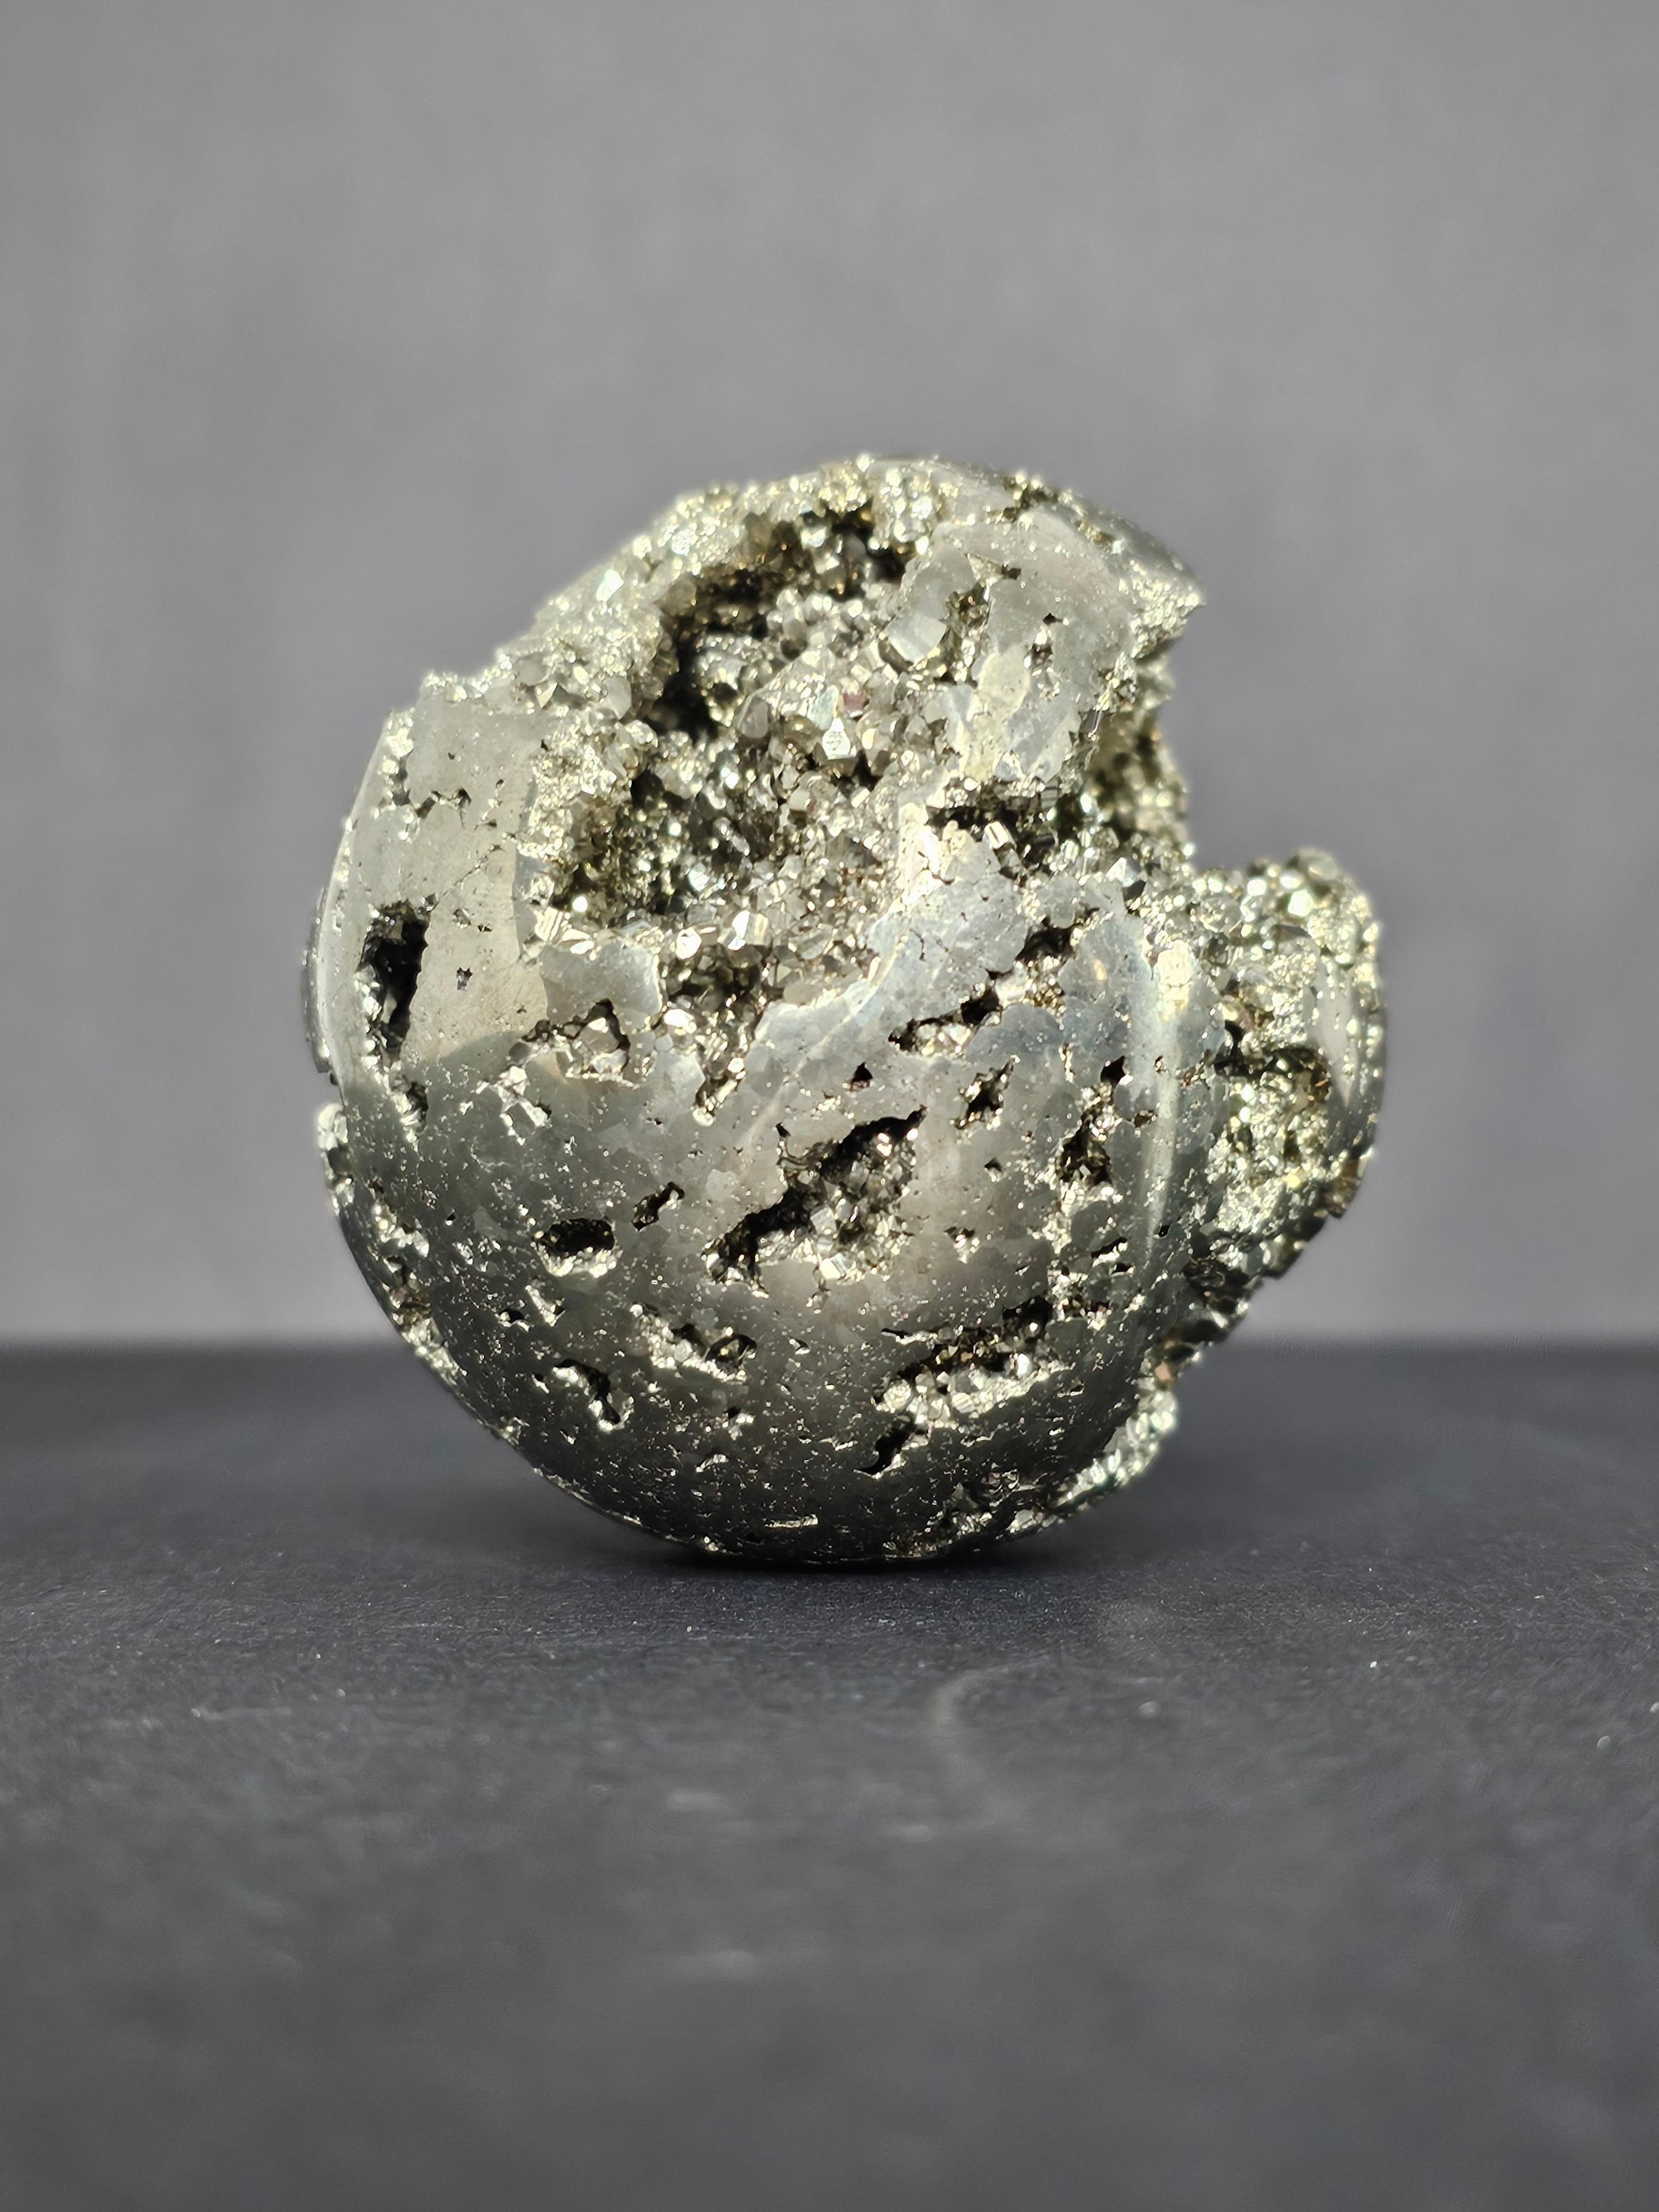 Polished Pyrite Fool's Gold Sphere Peru Natural Specimen 